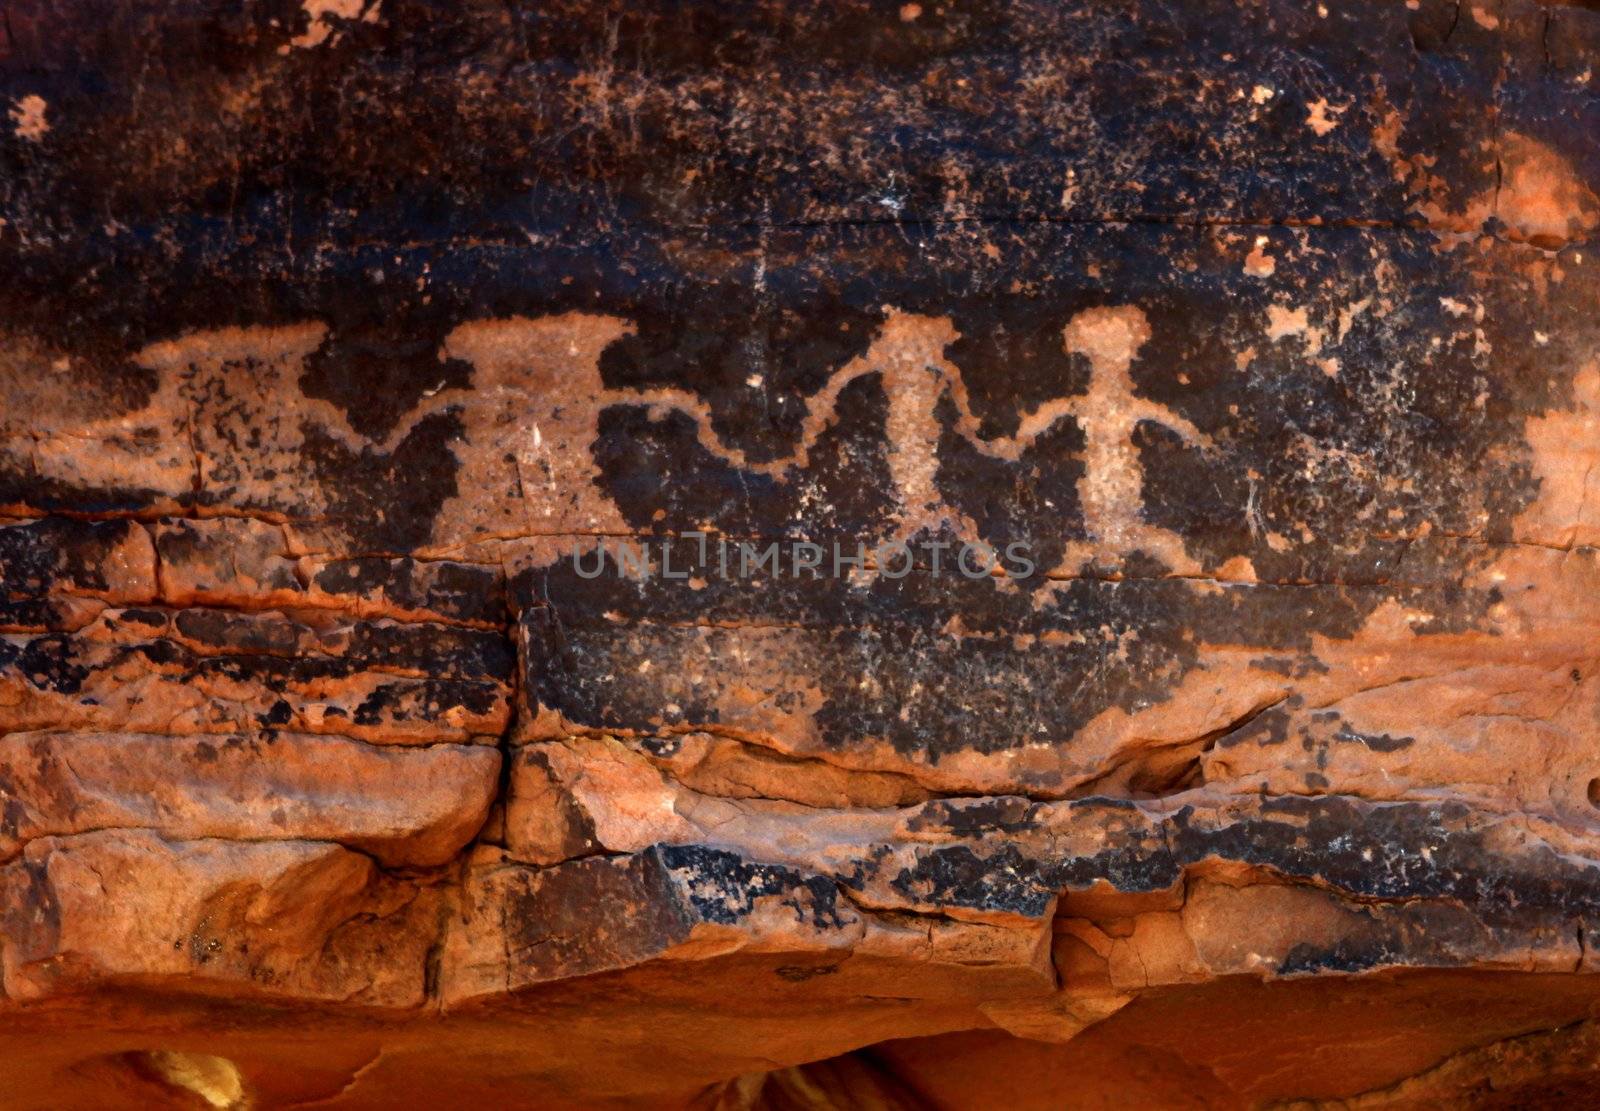 Native American Petroglyphs in Red Sandstone From the Southwestern Desert